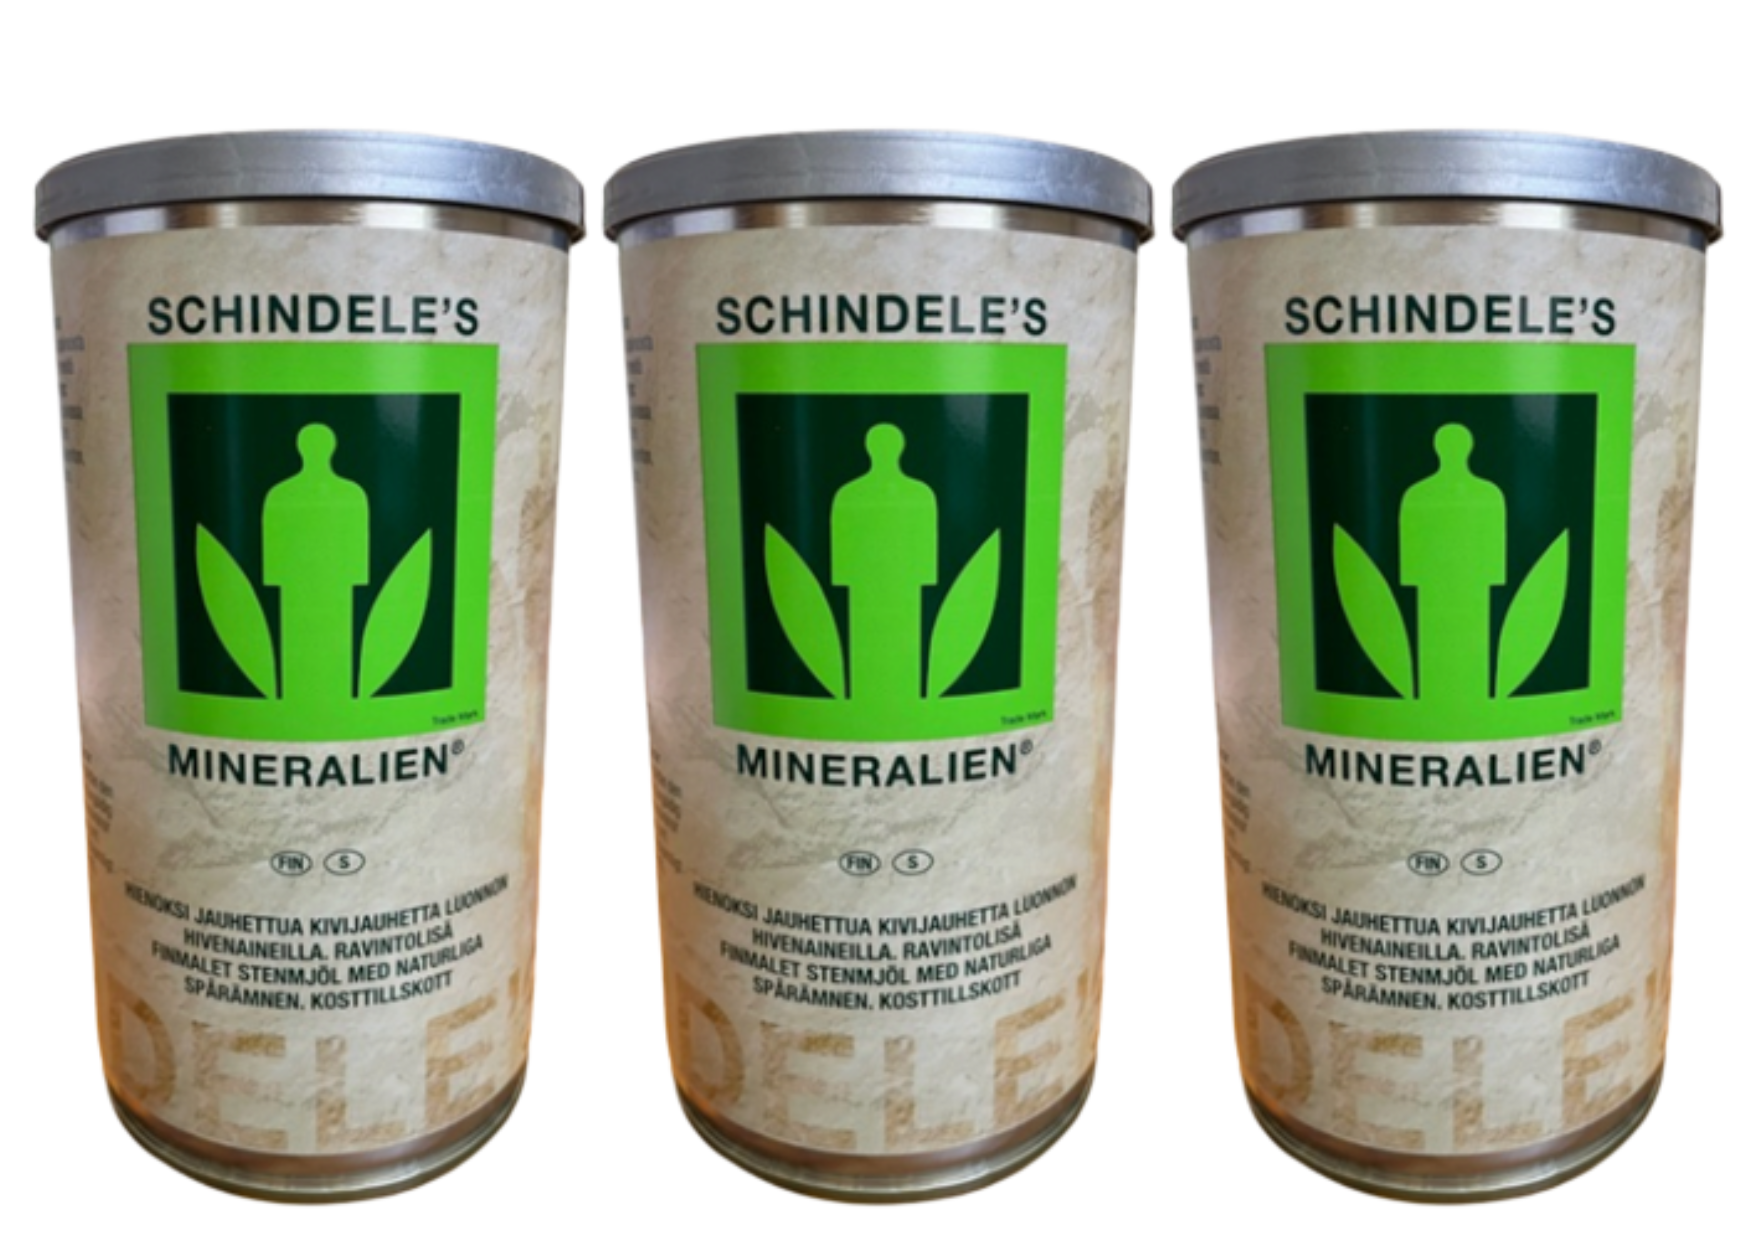 Schindele's Mineraler 400 g 3-PACK